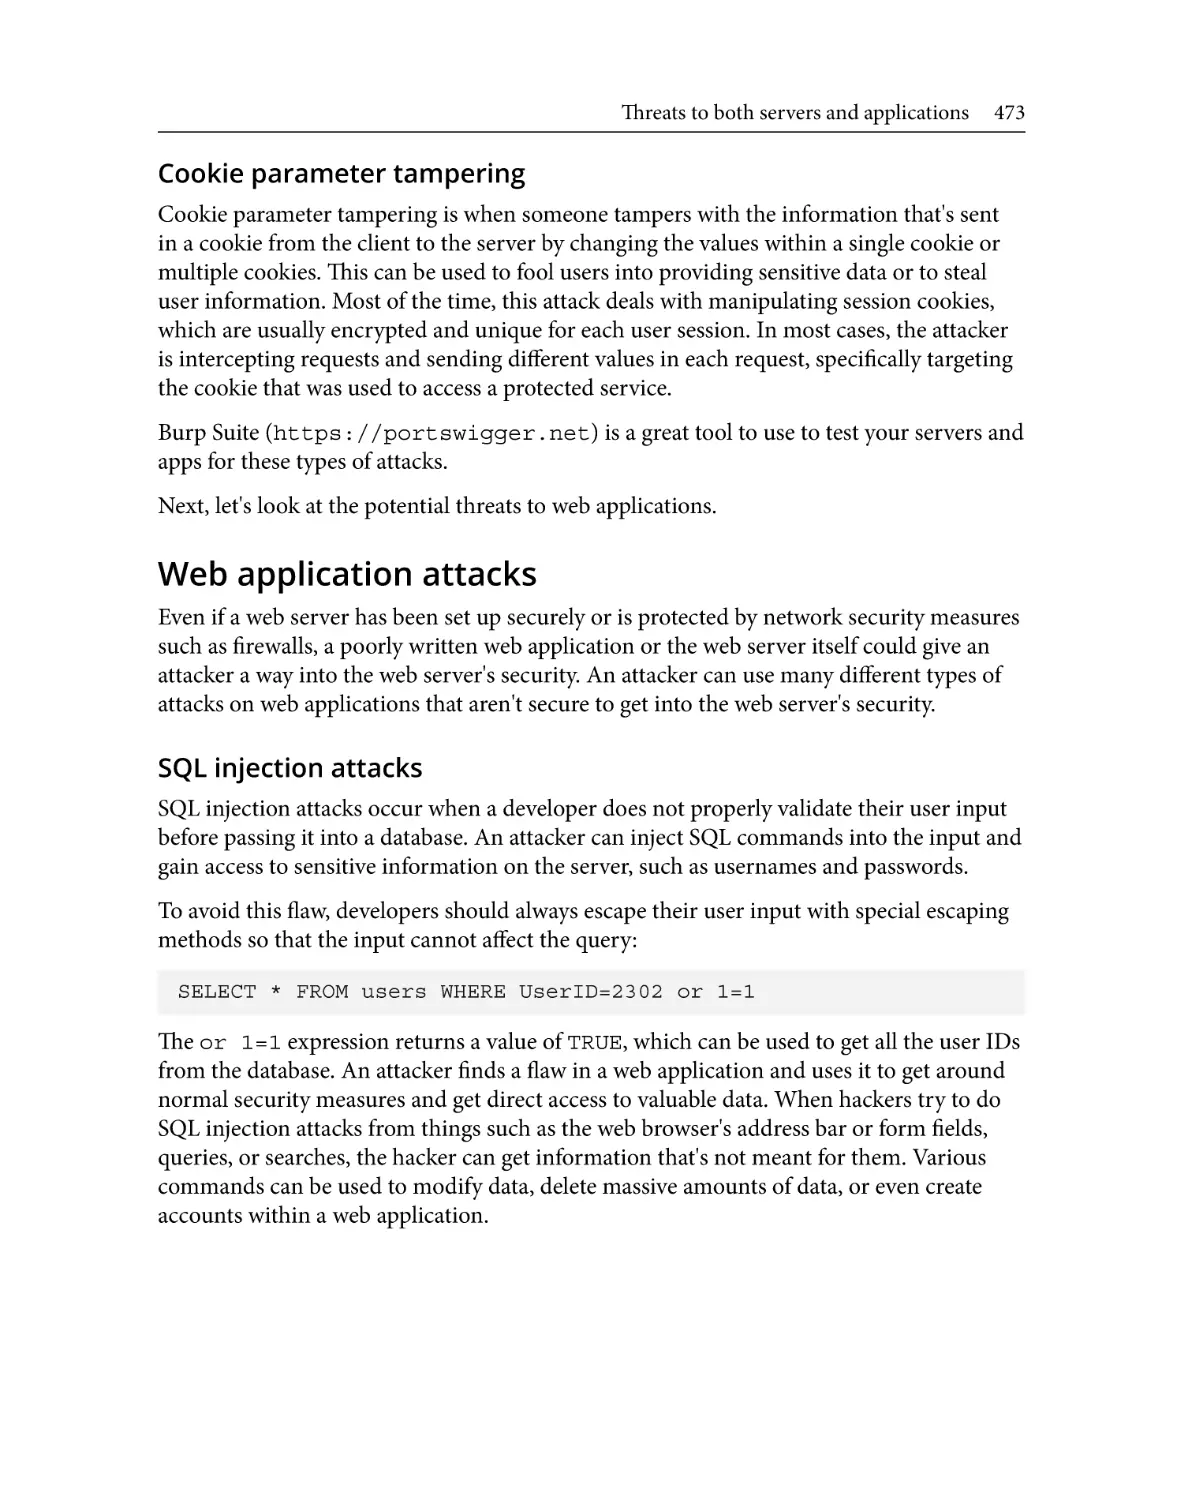 Web application attacks